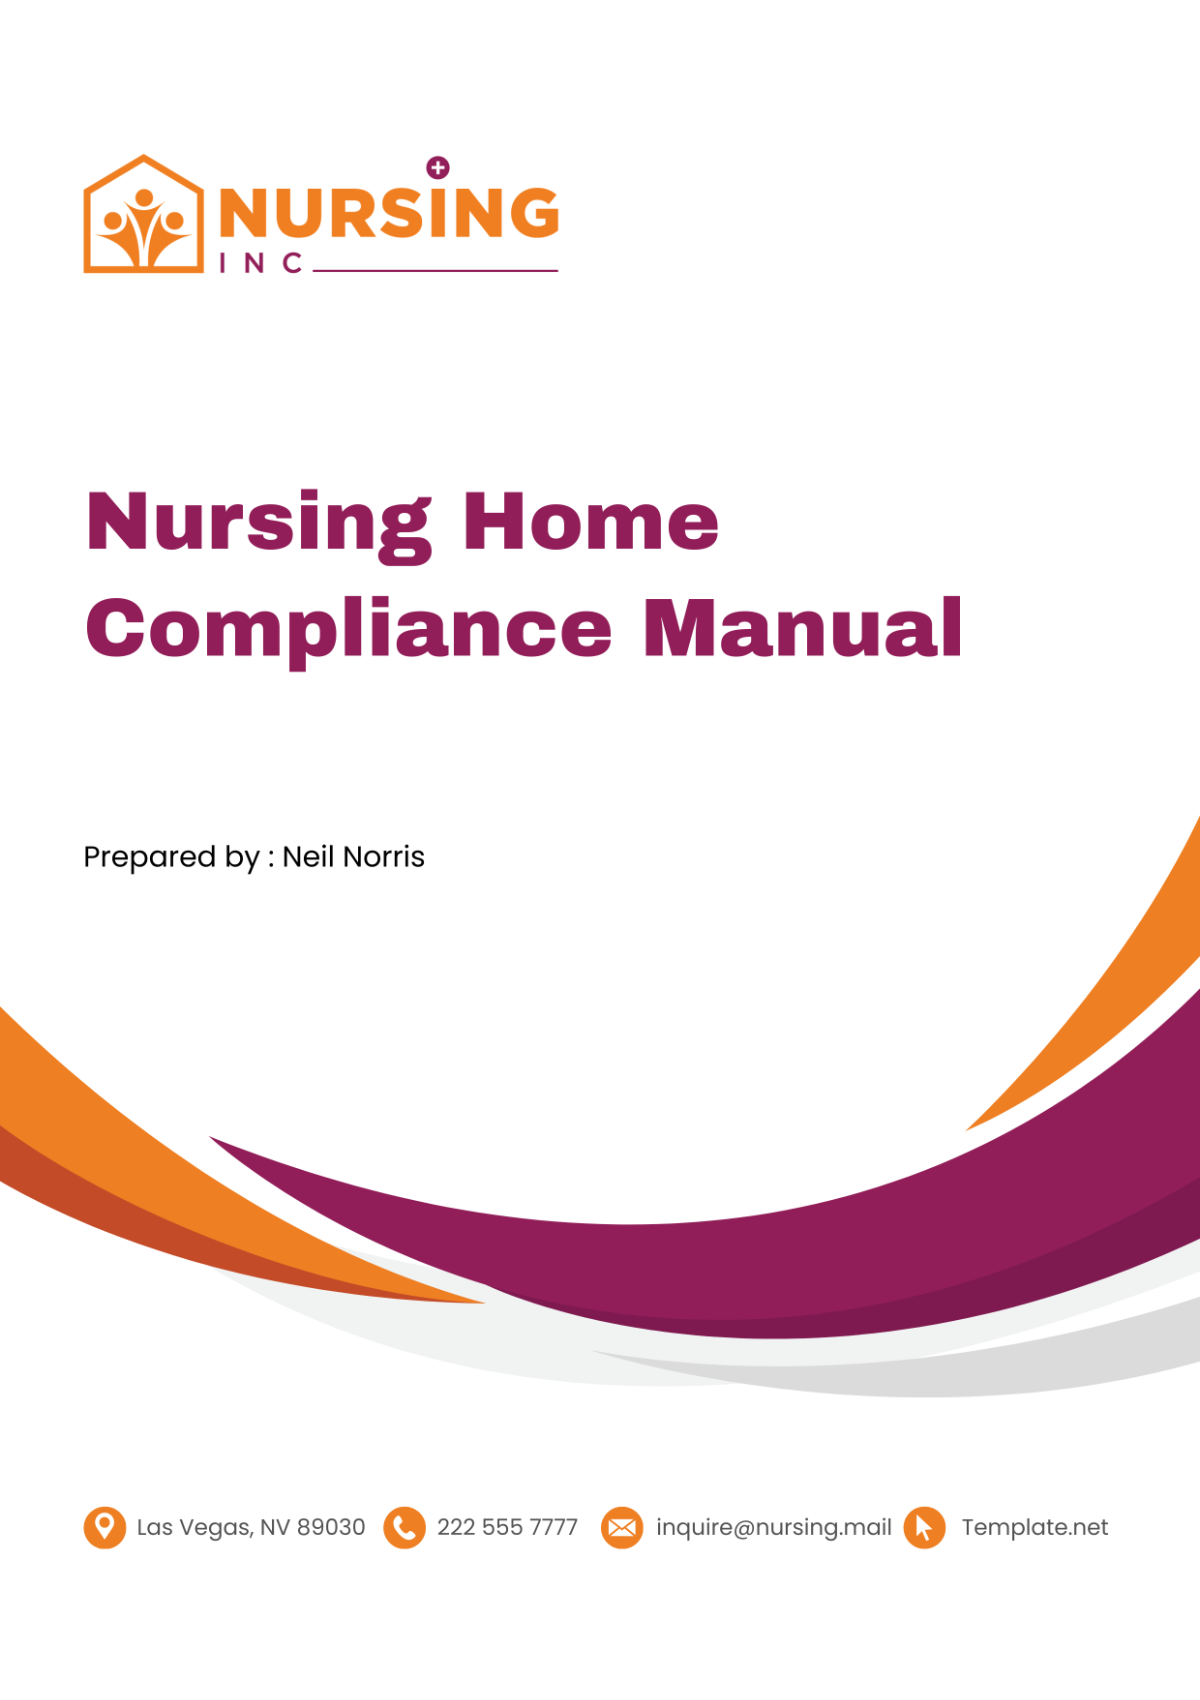 Nursing Home Compliance Manual Template